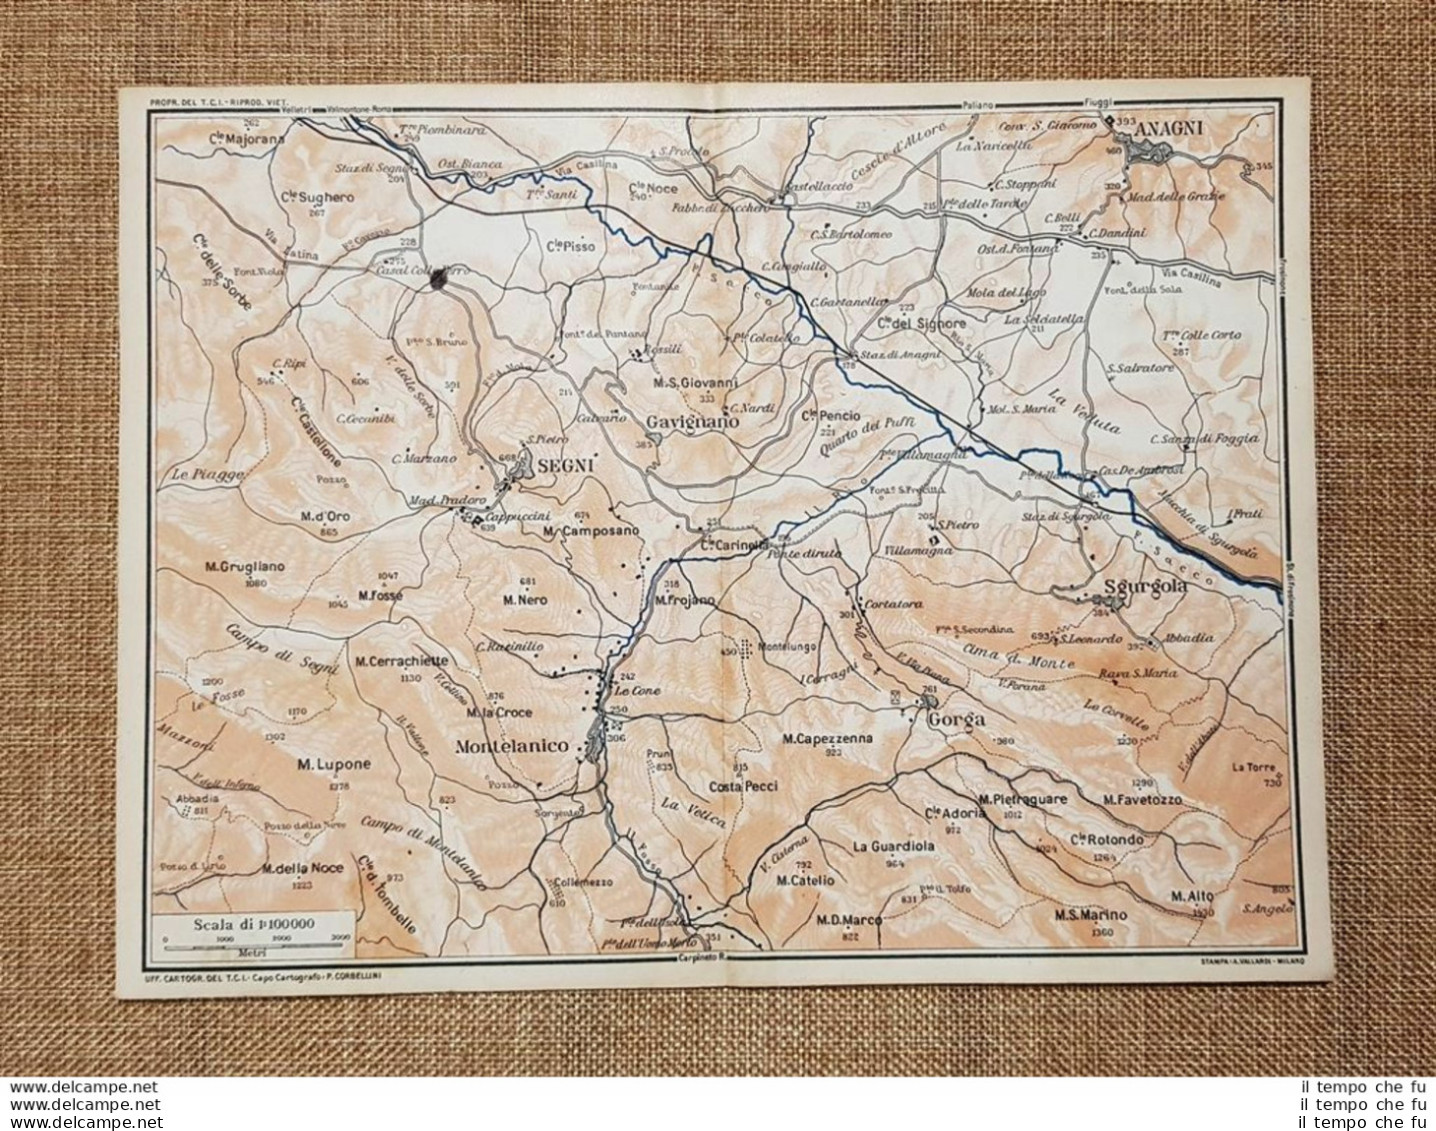 Carta O Cartina Del 1924 Anagni Gavignano Segni Montelanico Gorga Lazio T.C.I. - Cartes Géographiques